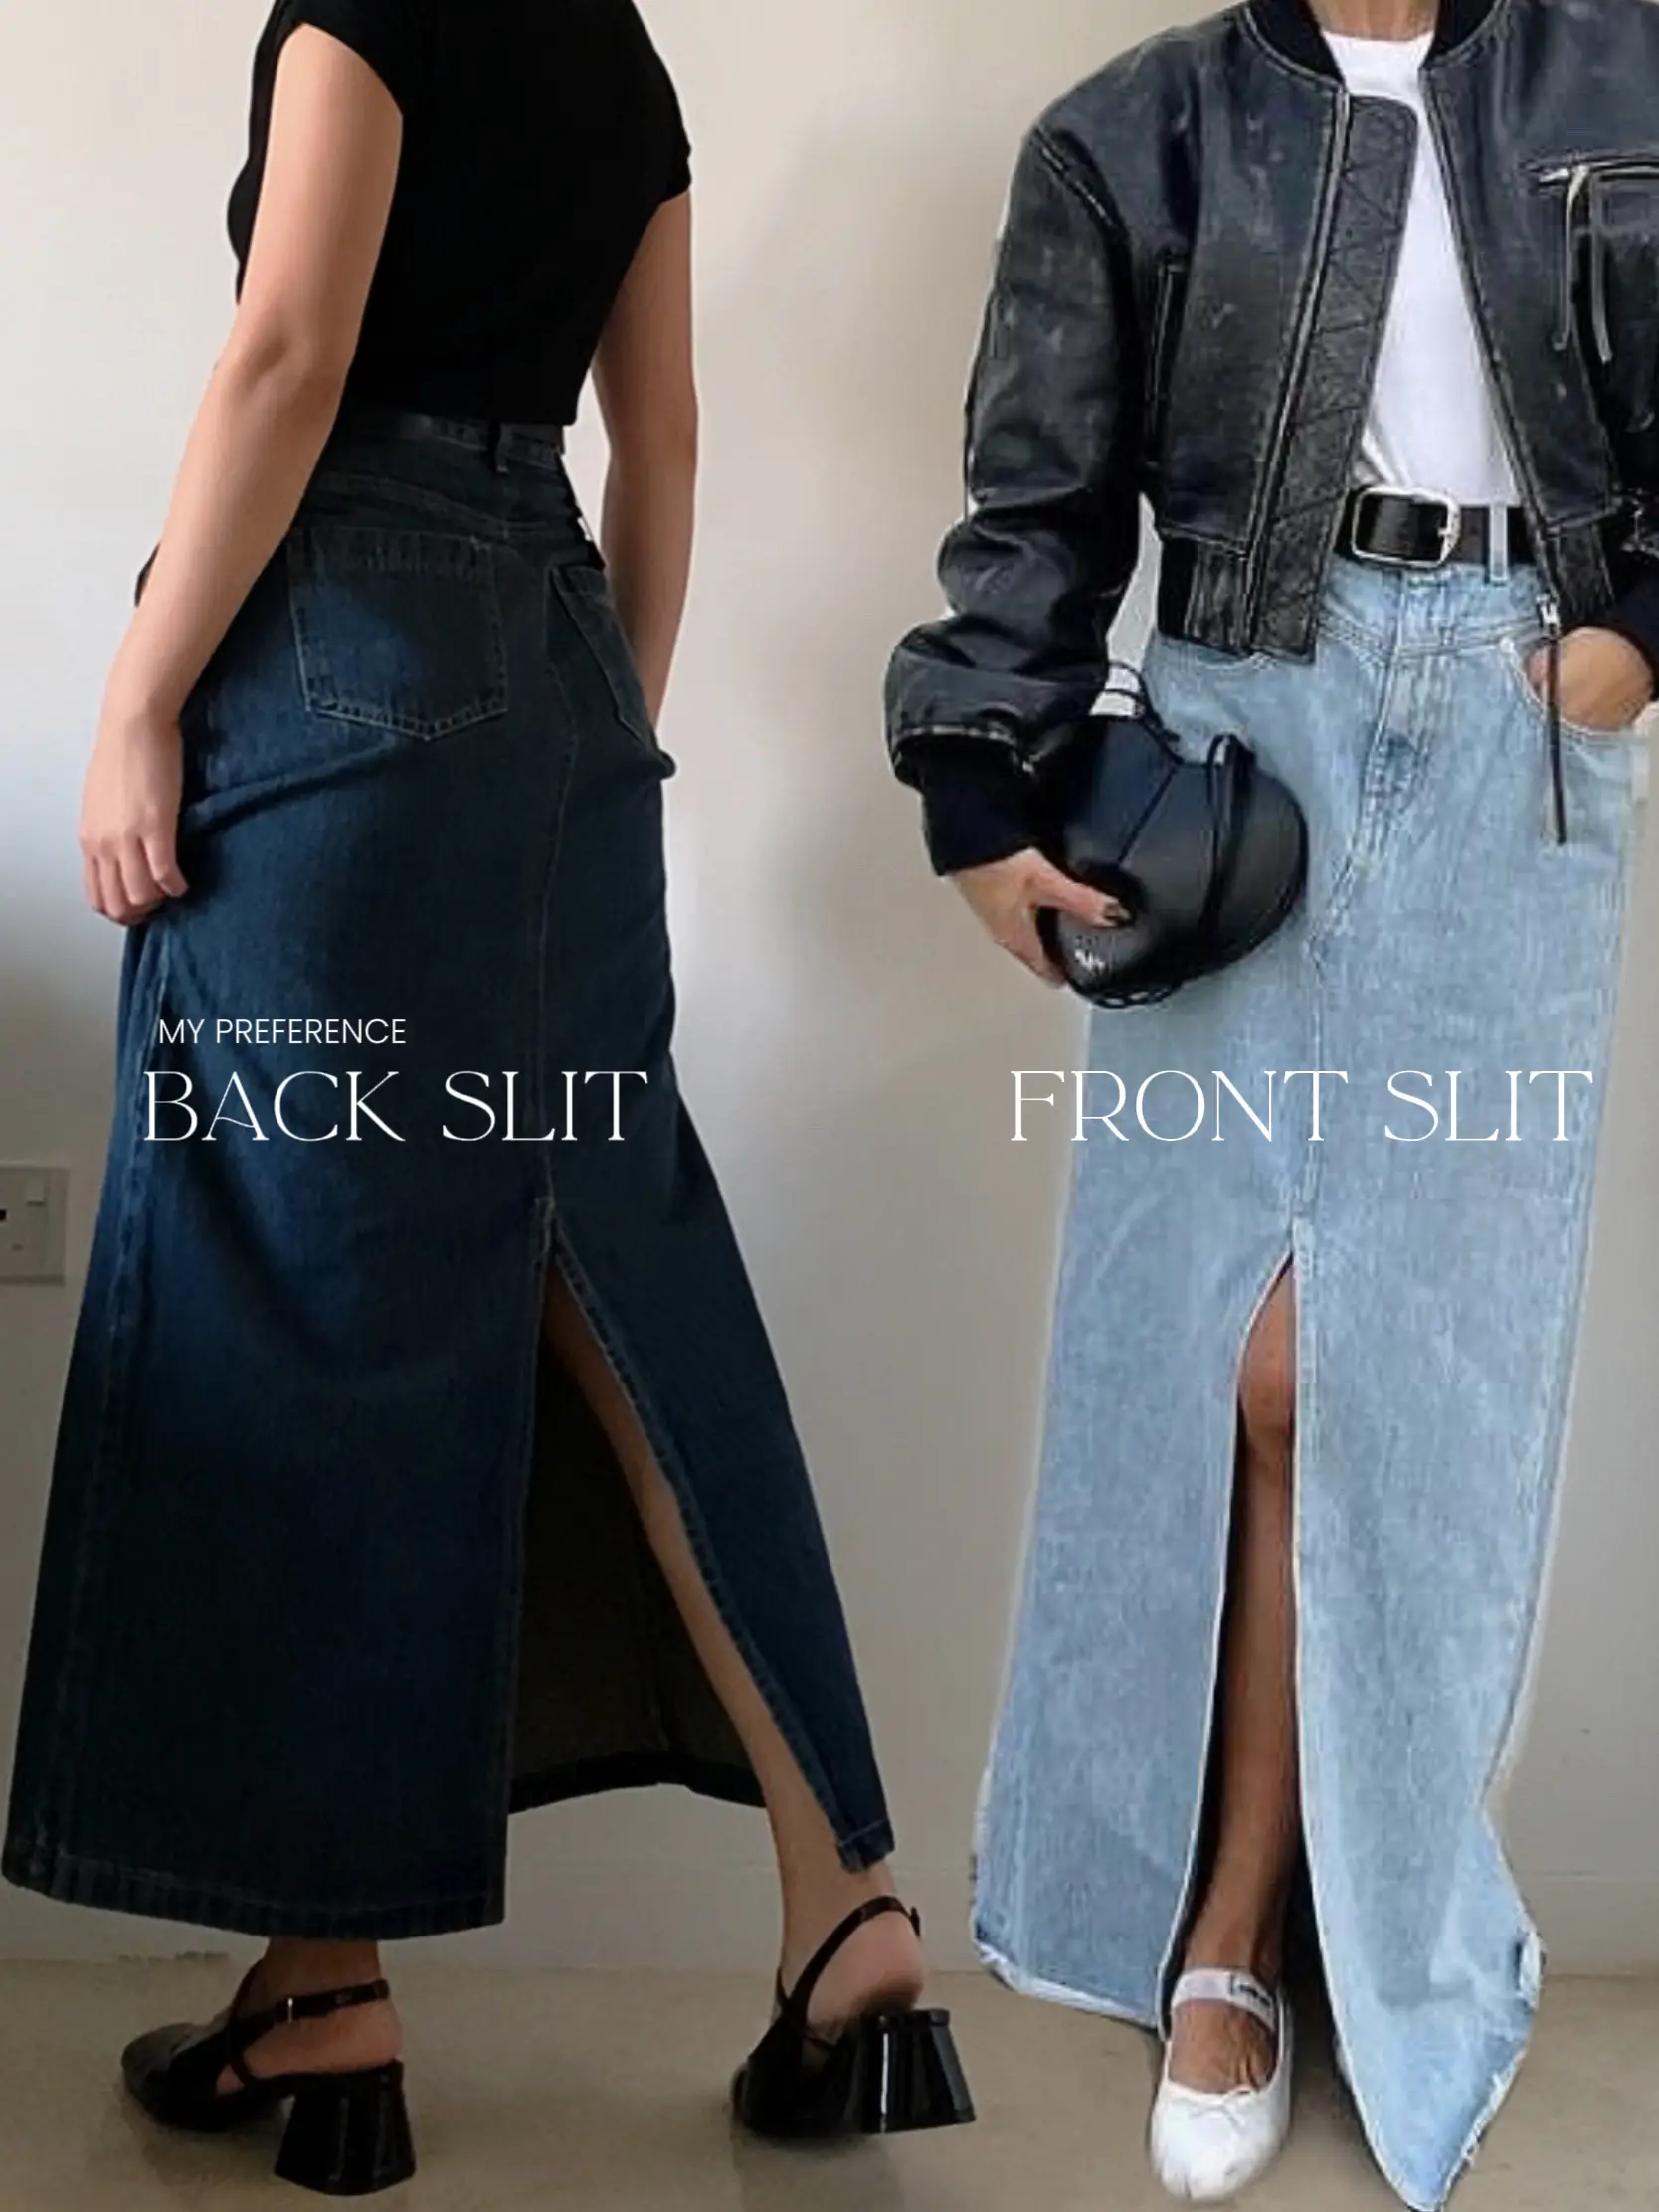 Stylish & effortless looks with Maxi denim skirt 🖤